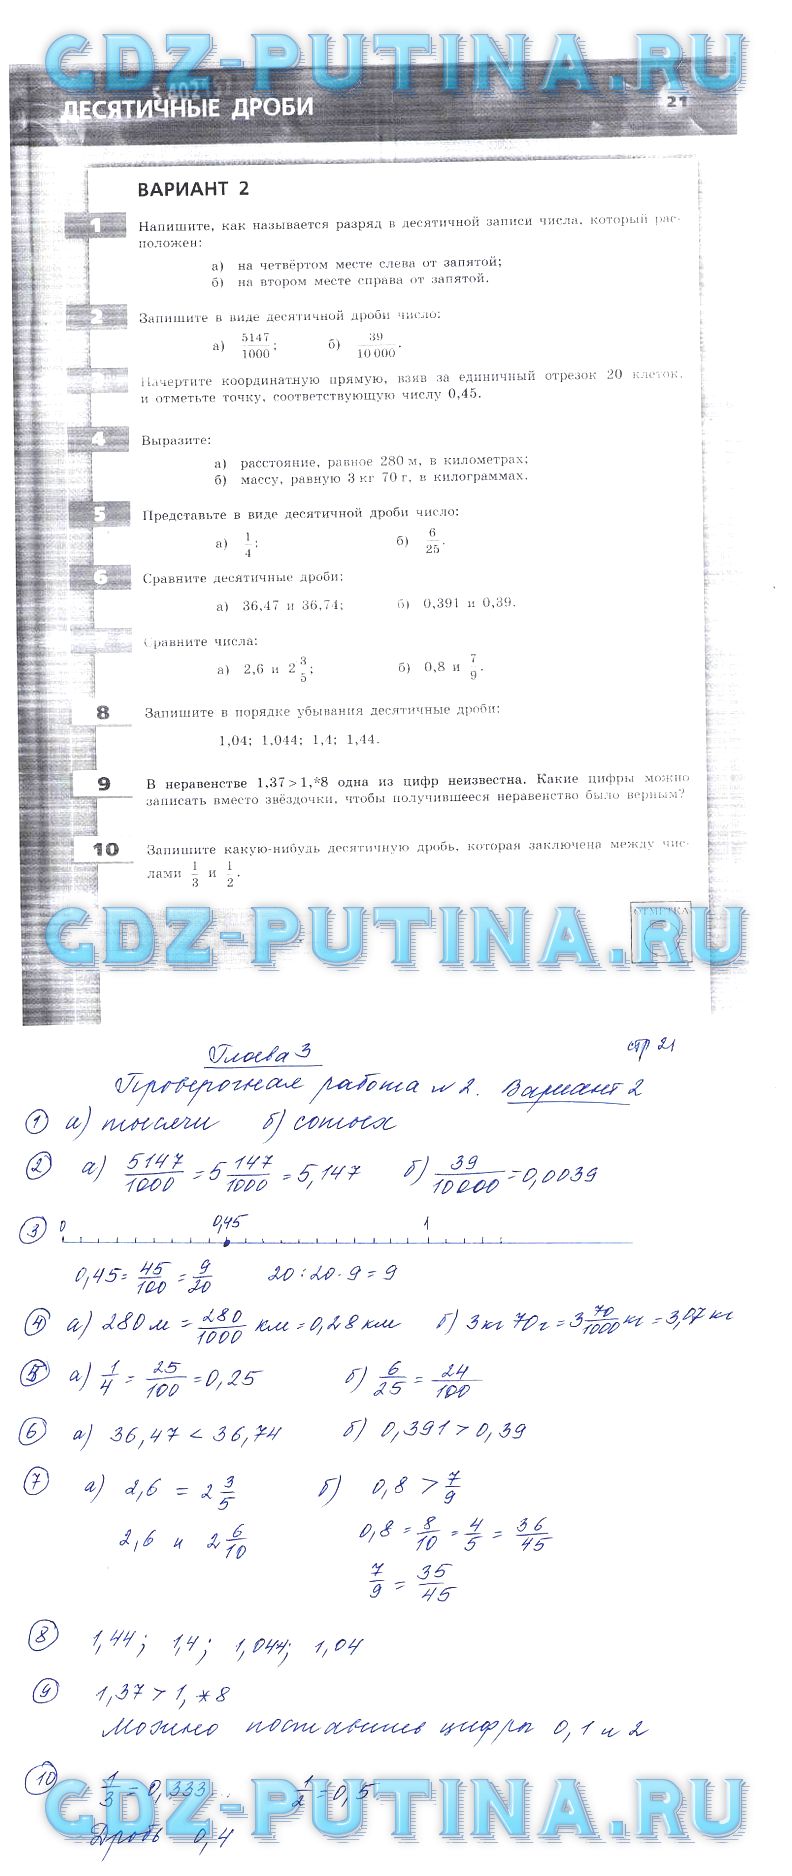 гдз 6 класс тетрадь-экзаменатор страница 21 математика Кузнецова